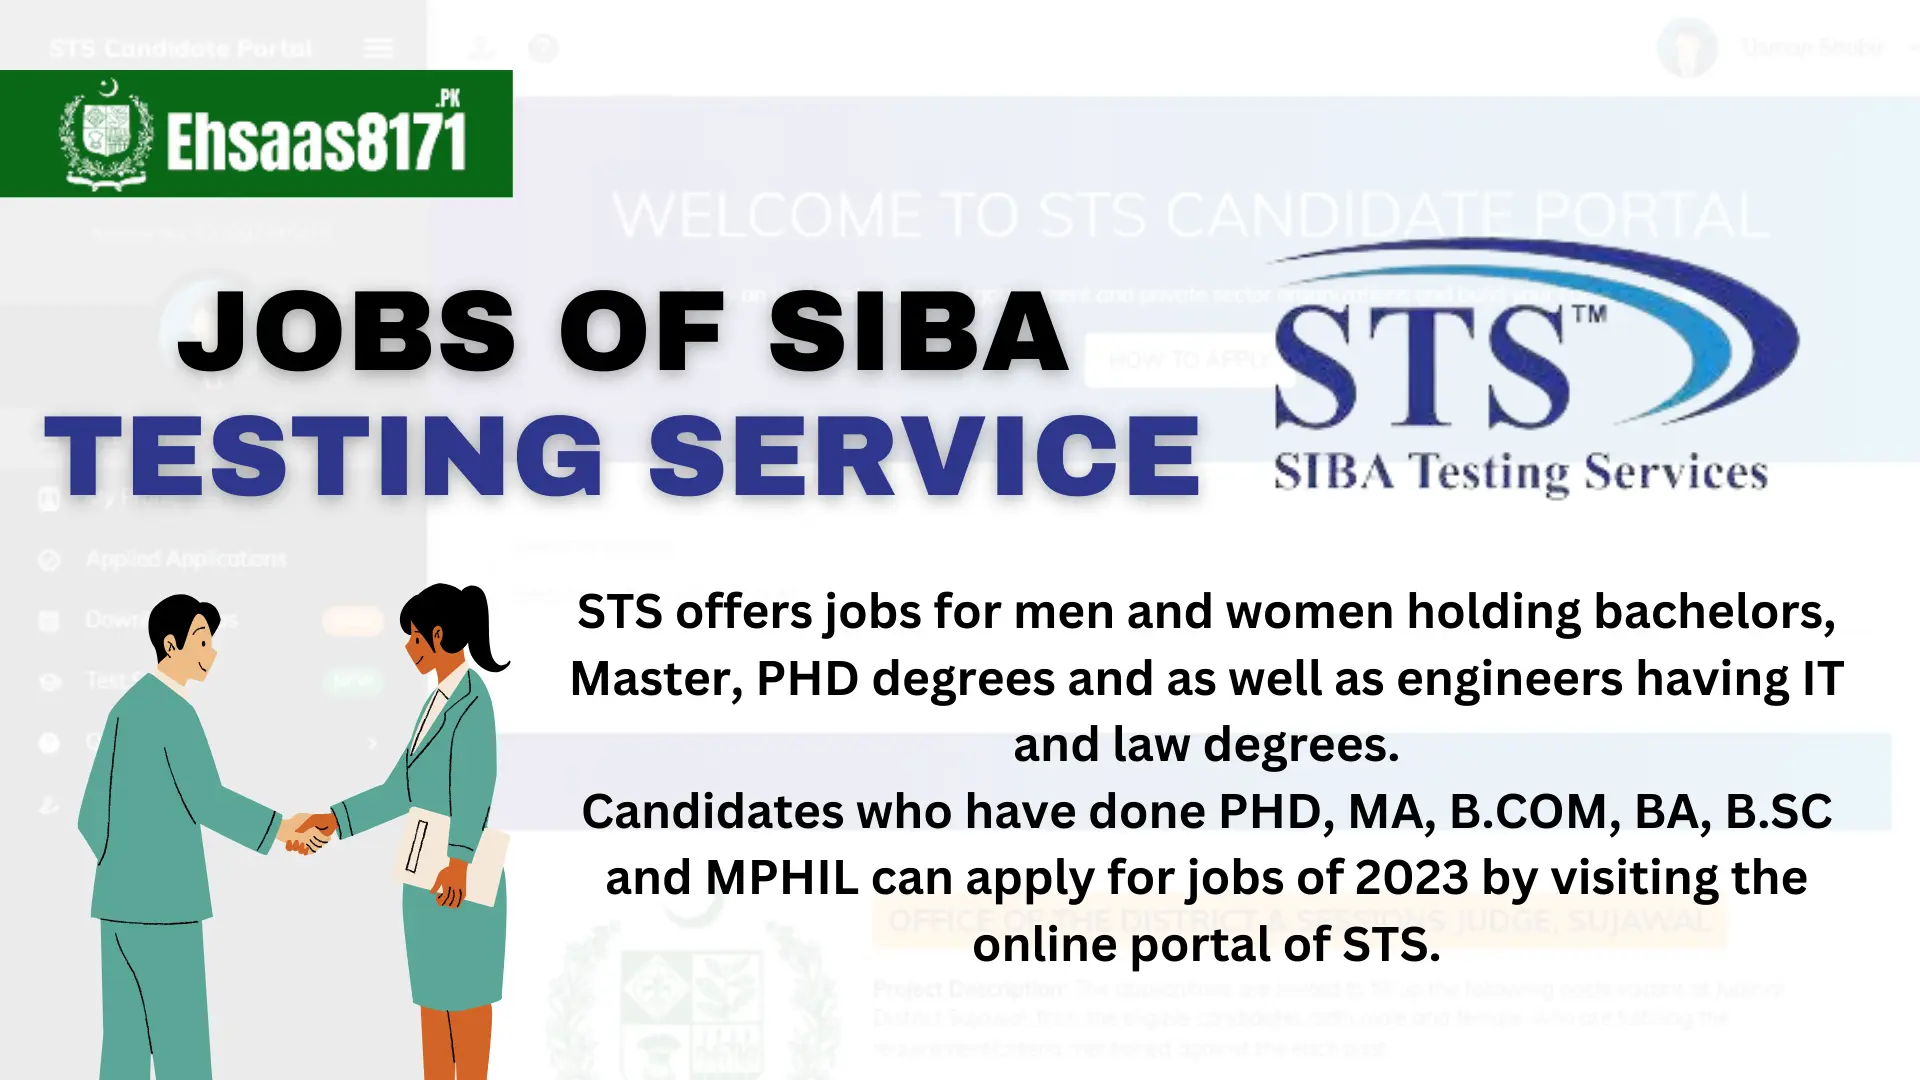 Jobs of SIBA testing service